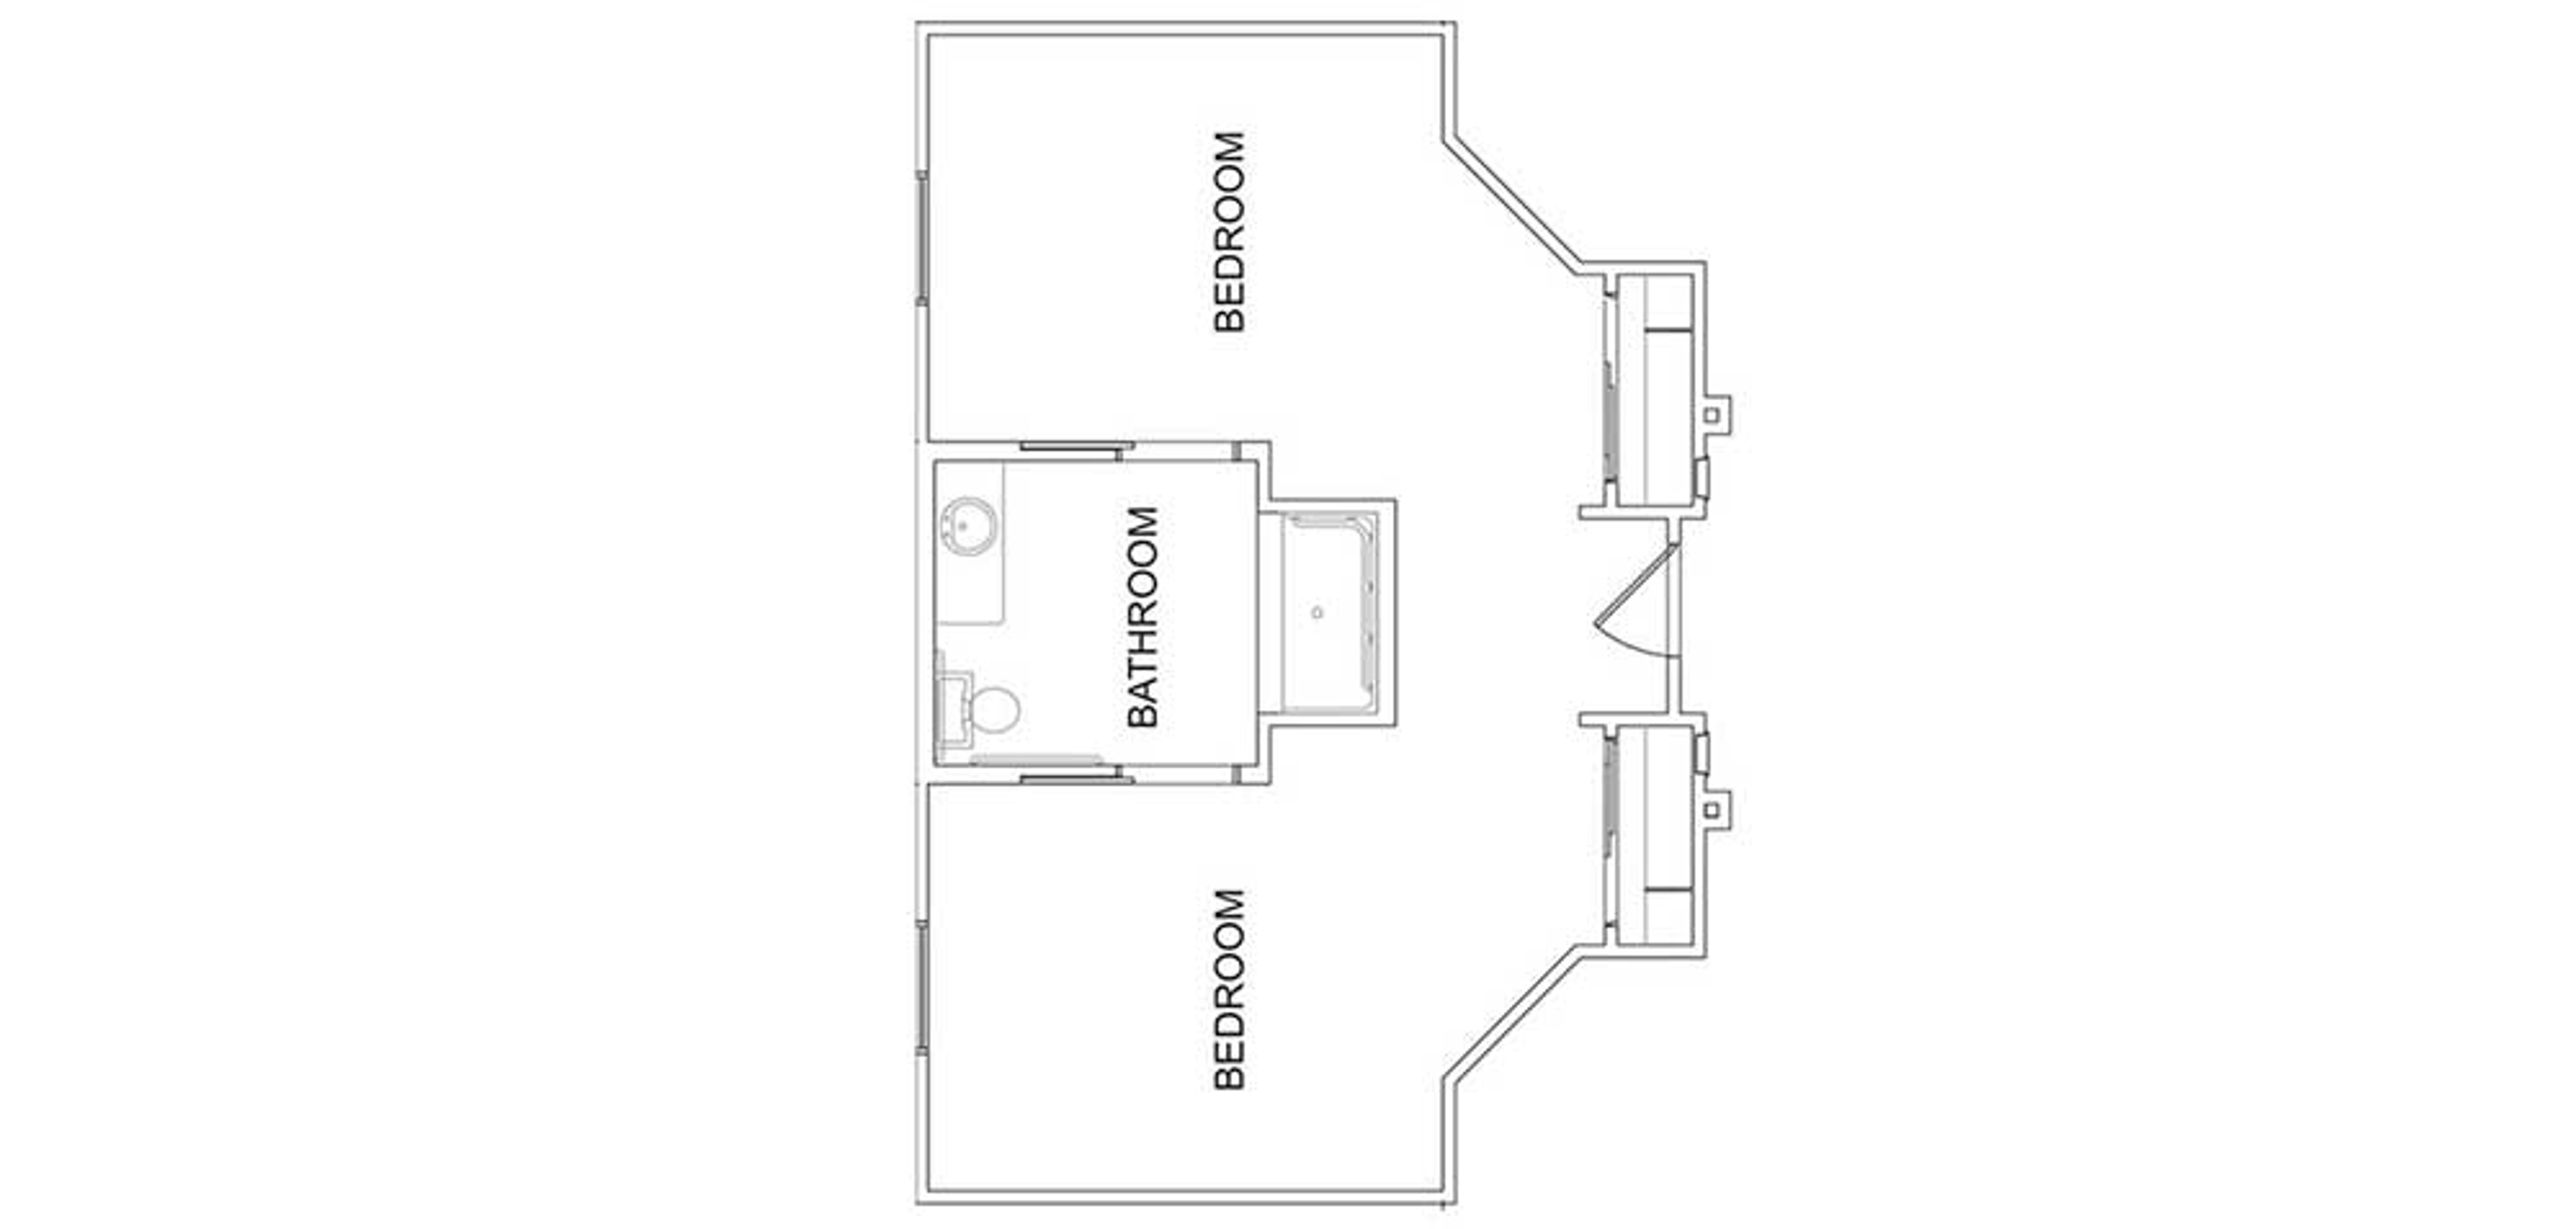 Floorplan - Pecan Pointe - 2 bed, 1 bath, Companion Suite Memory Care